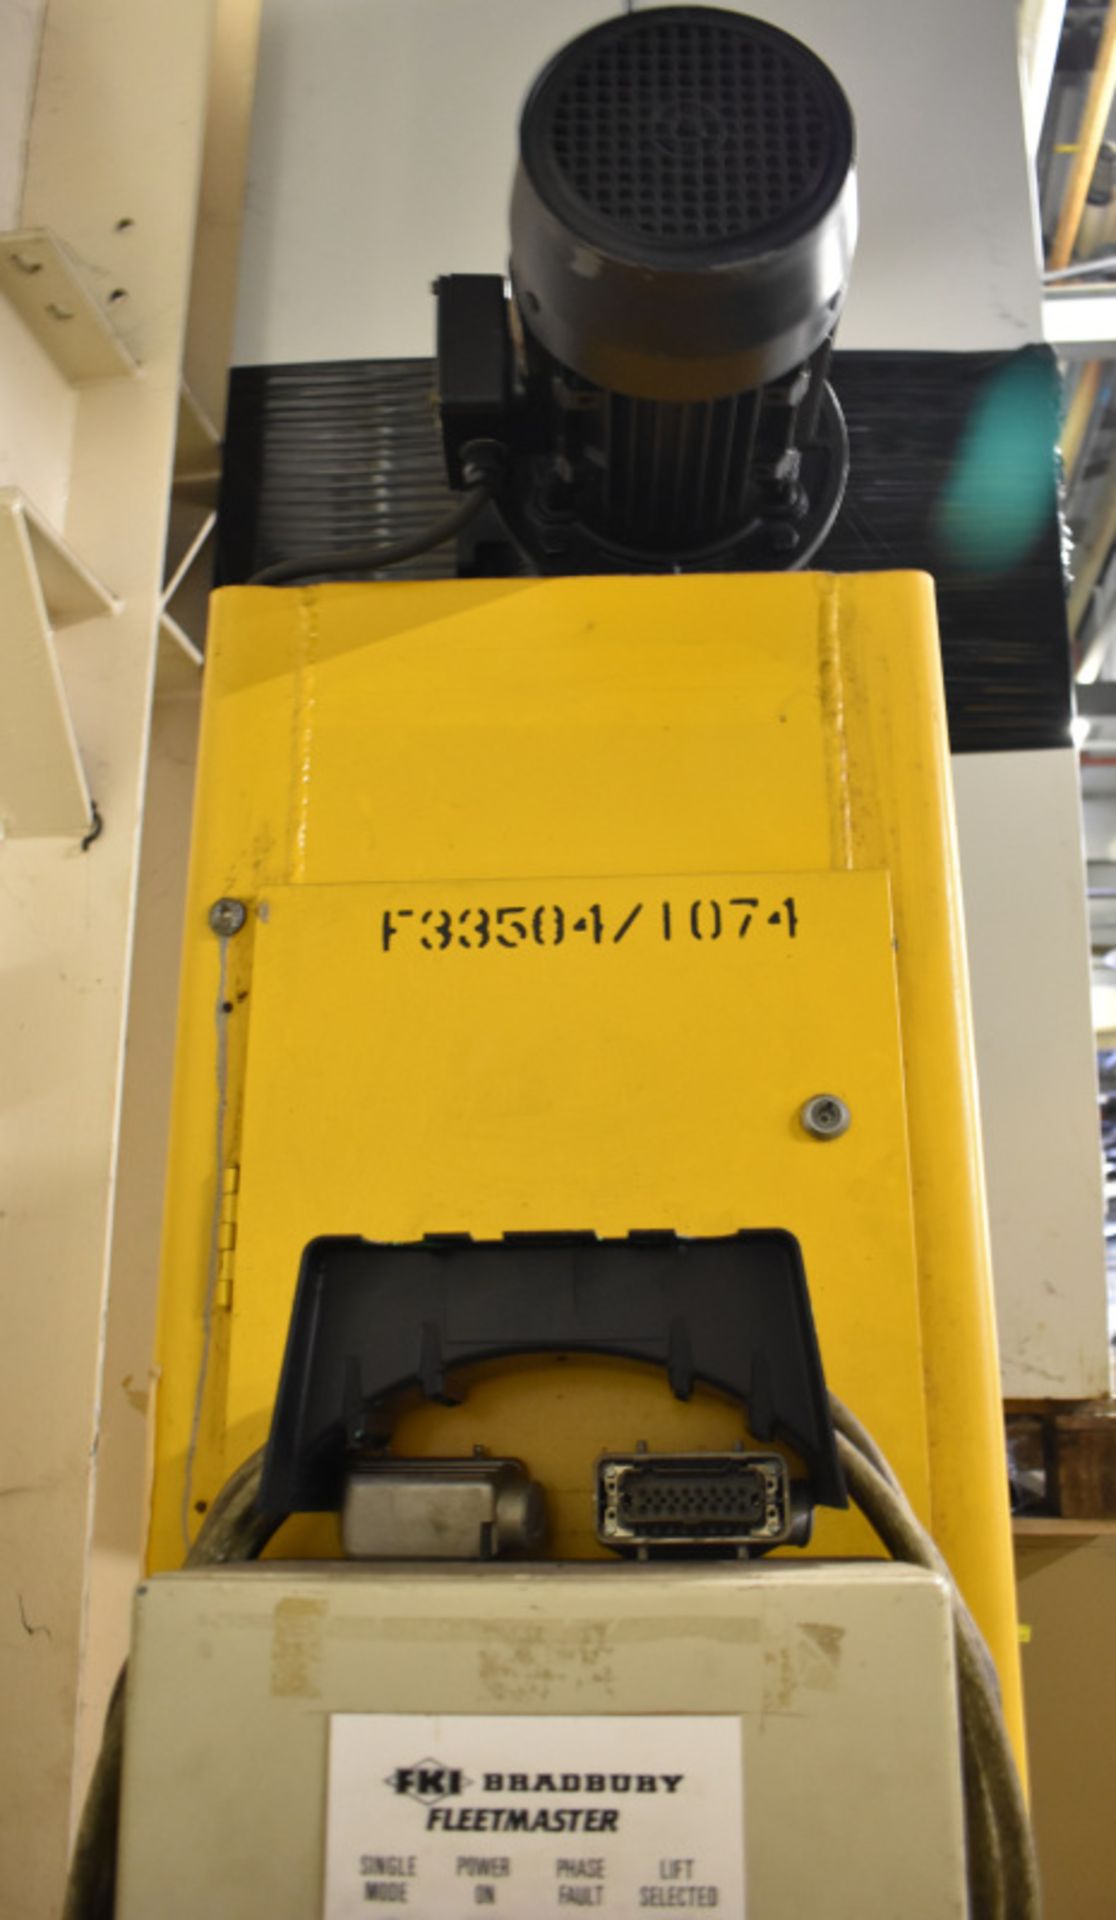 FKI Bradbury mobile 4 post vehicle lift system - 24 tonnes per set of 4 - Image 25 of 31